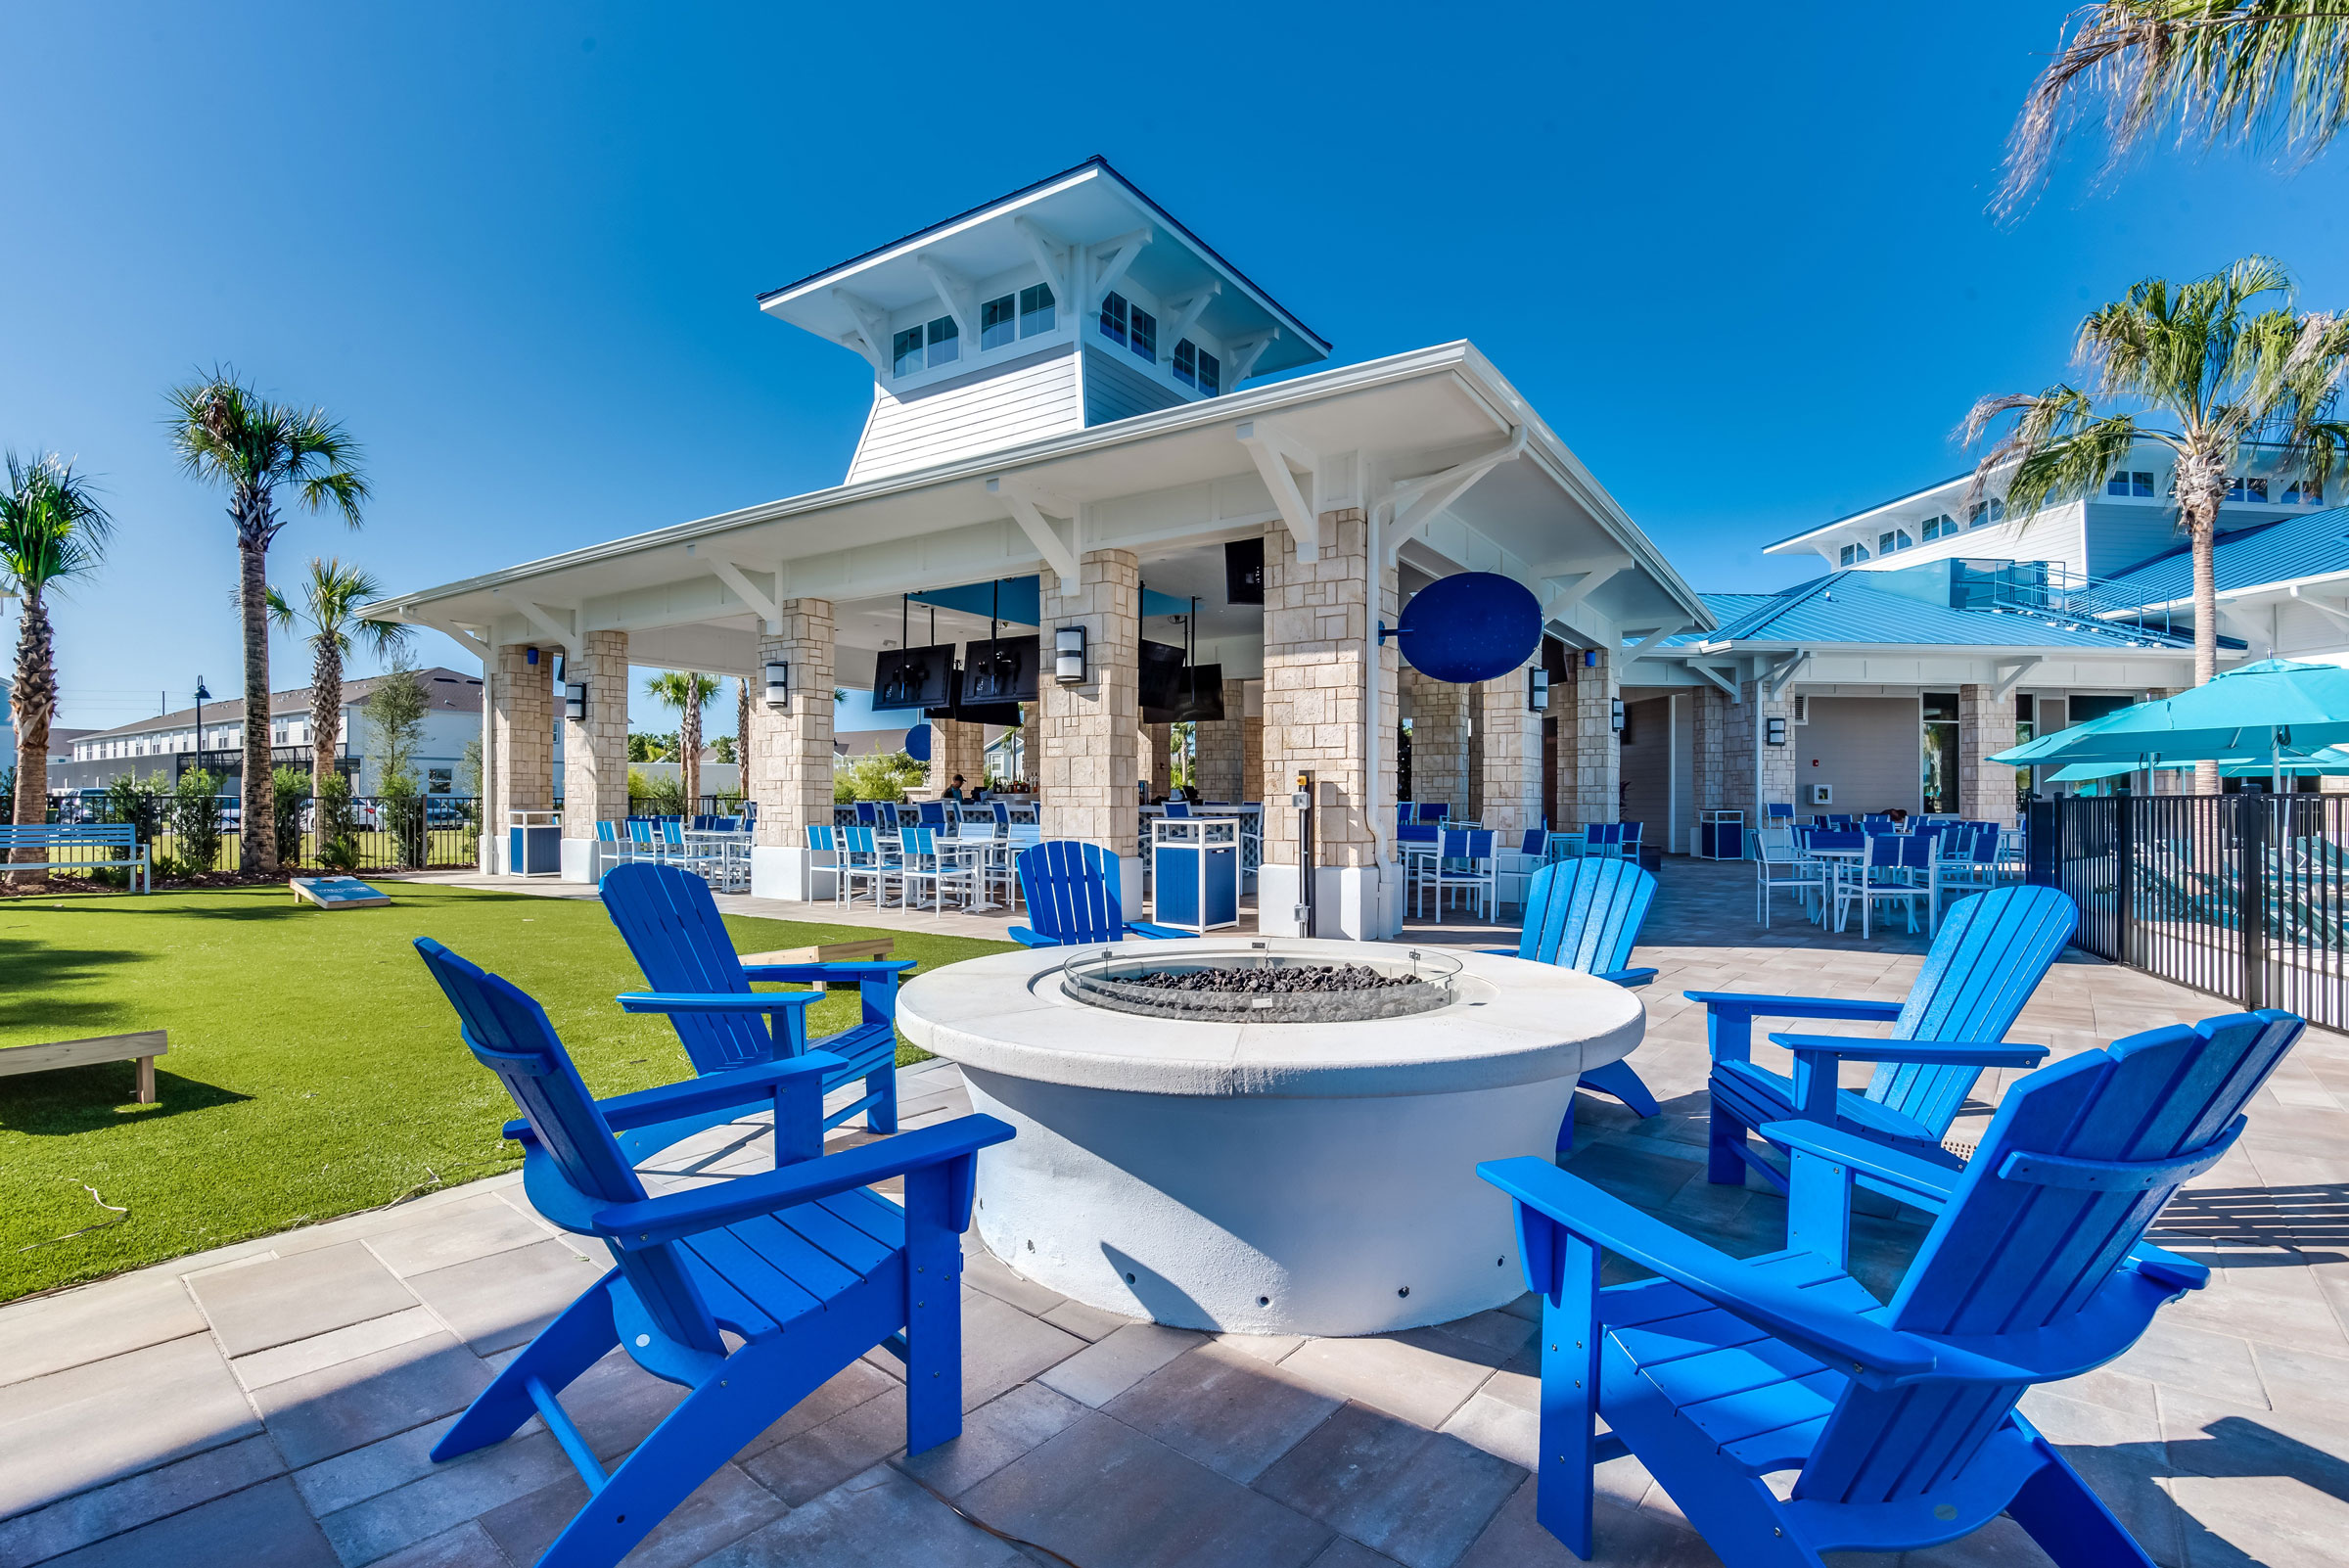 6 Windsor Island Resort Bar and Eatery